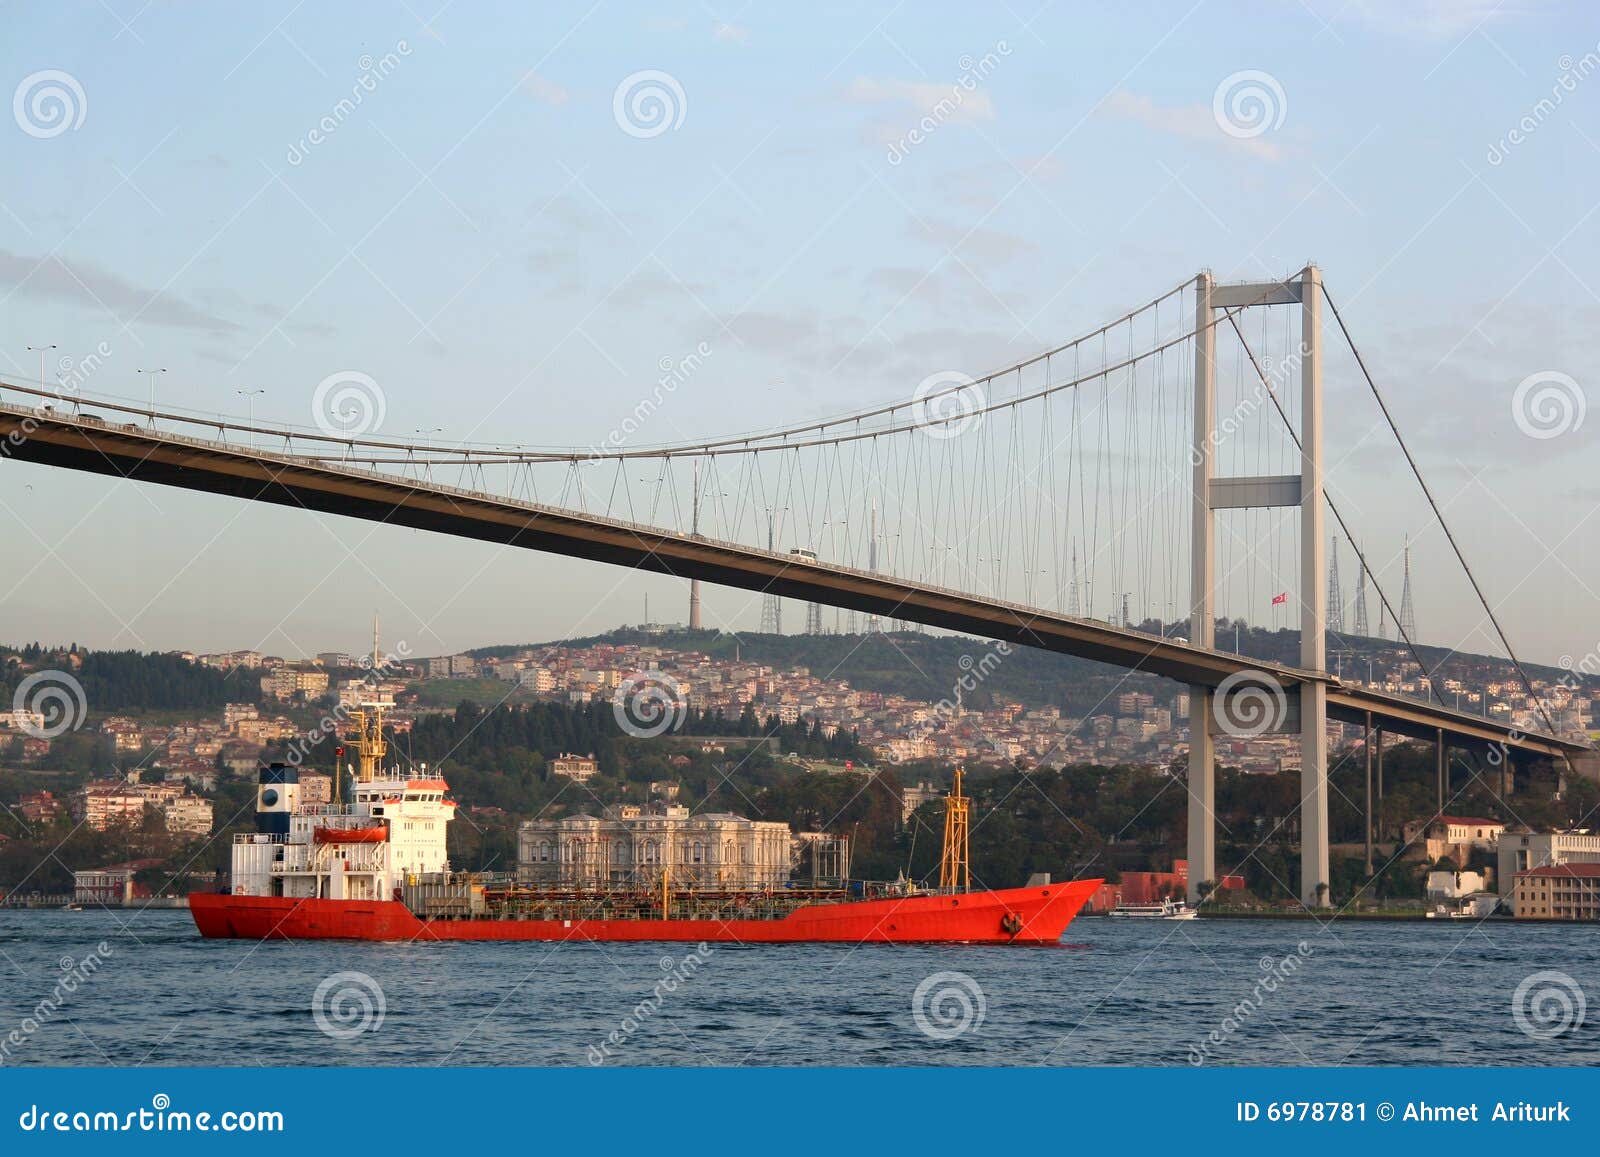 bosporus bridge with freighter